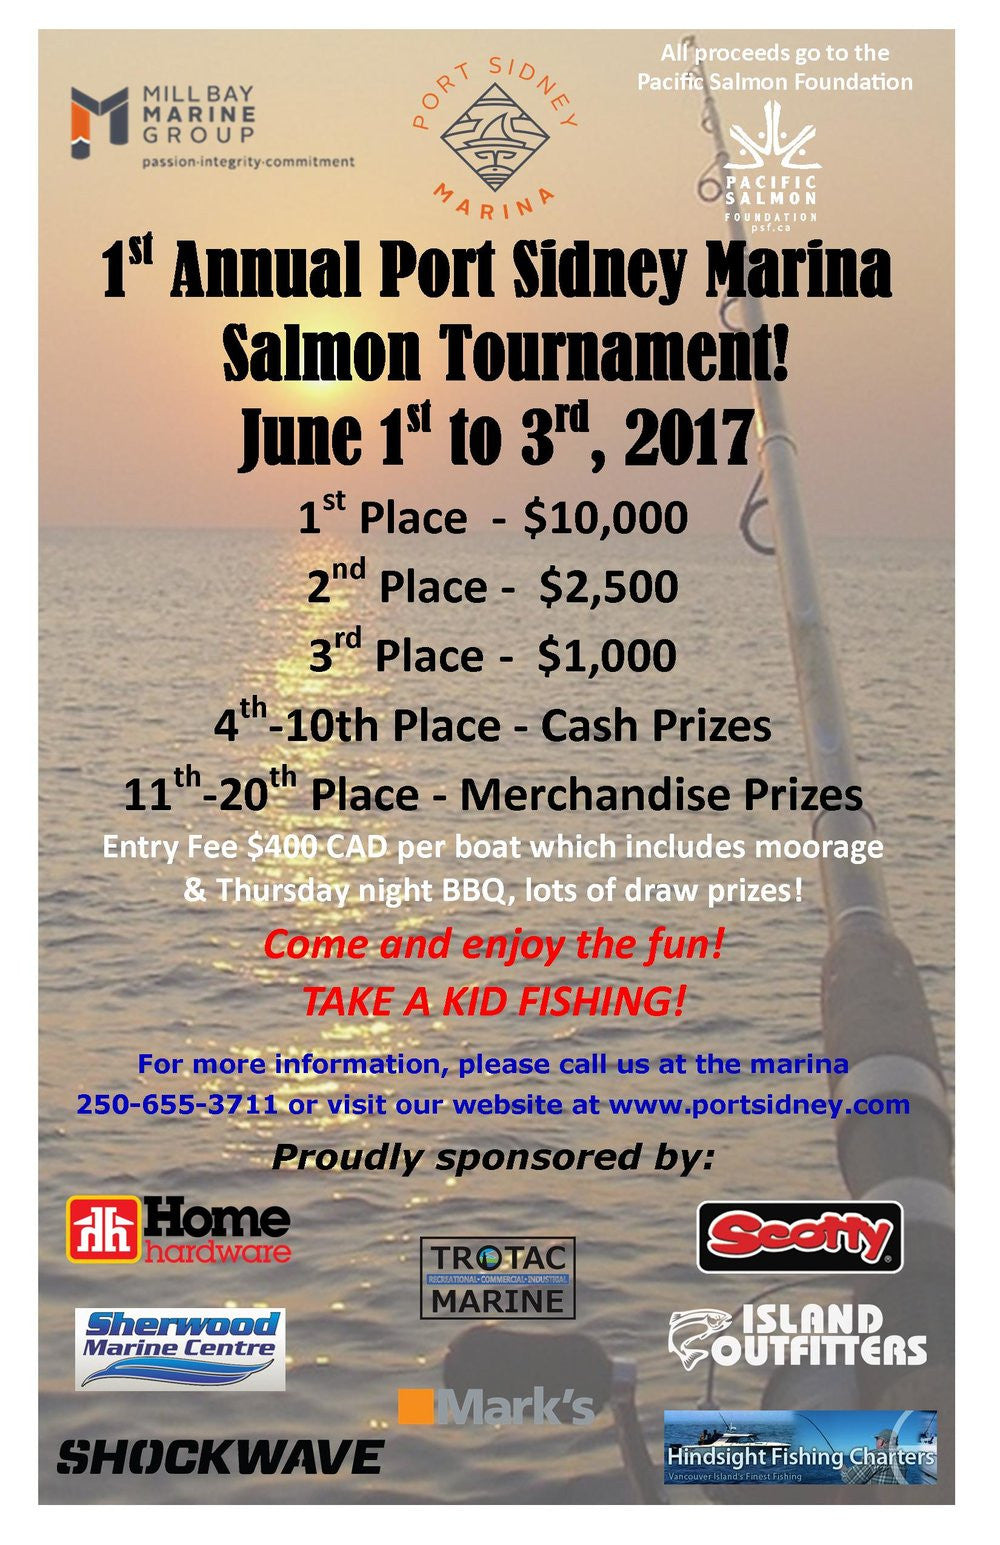 PEETZ Sponsors the 2017 Port Sidney Salmon Tournament